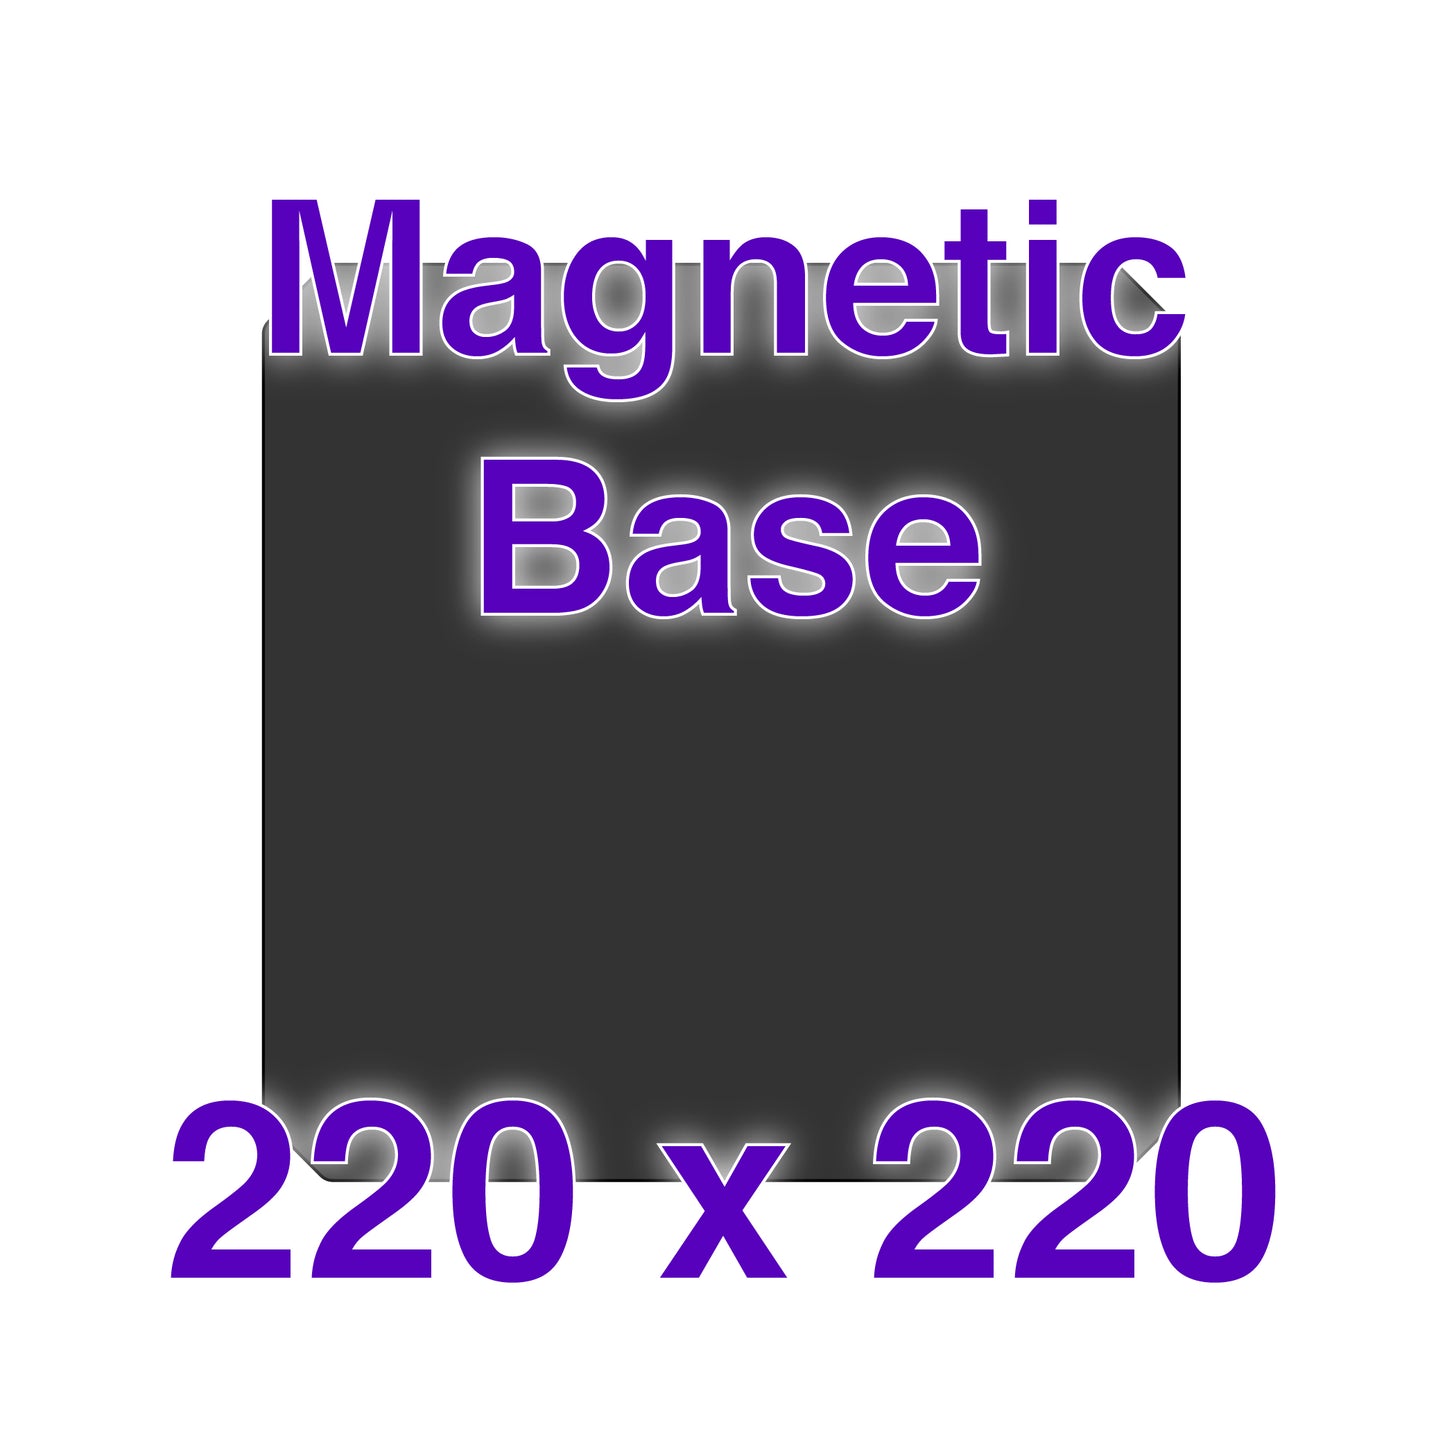 Magnetic Base - 220 x 220